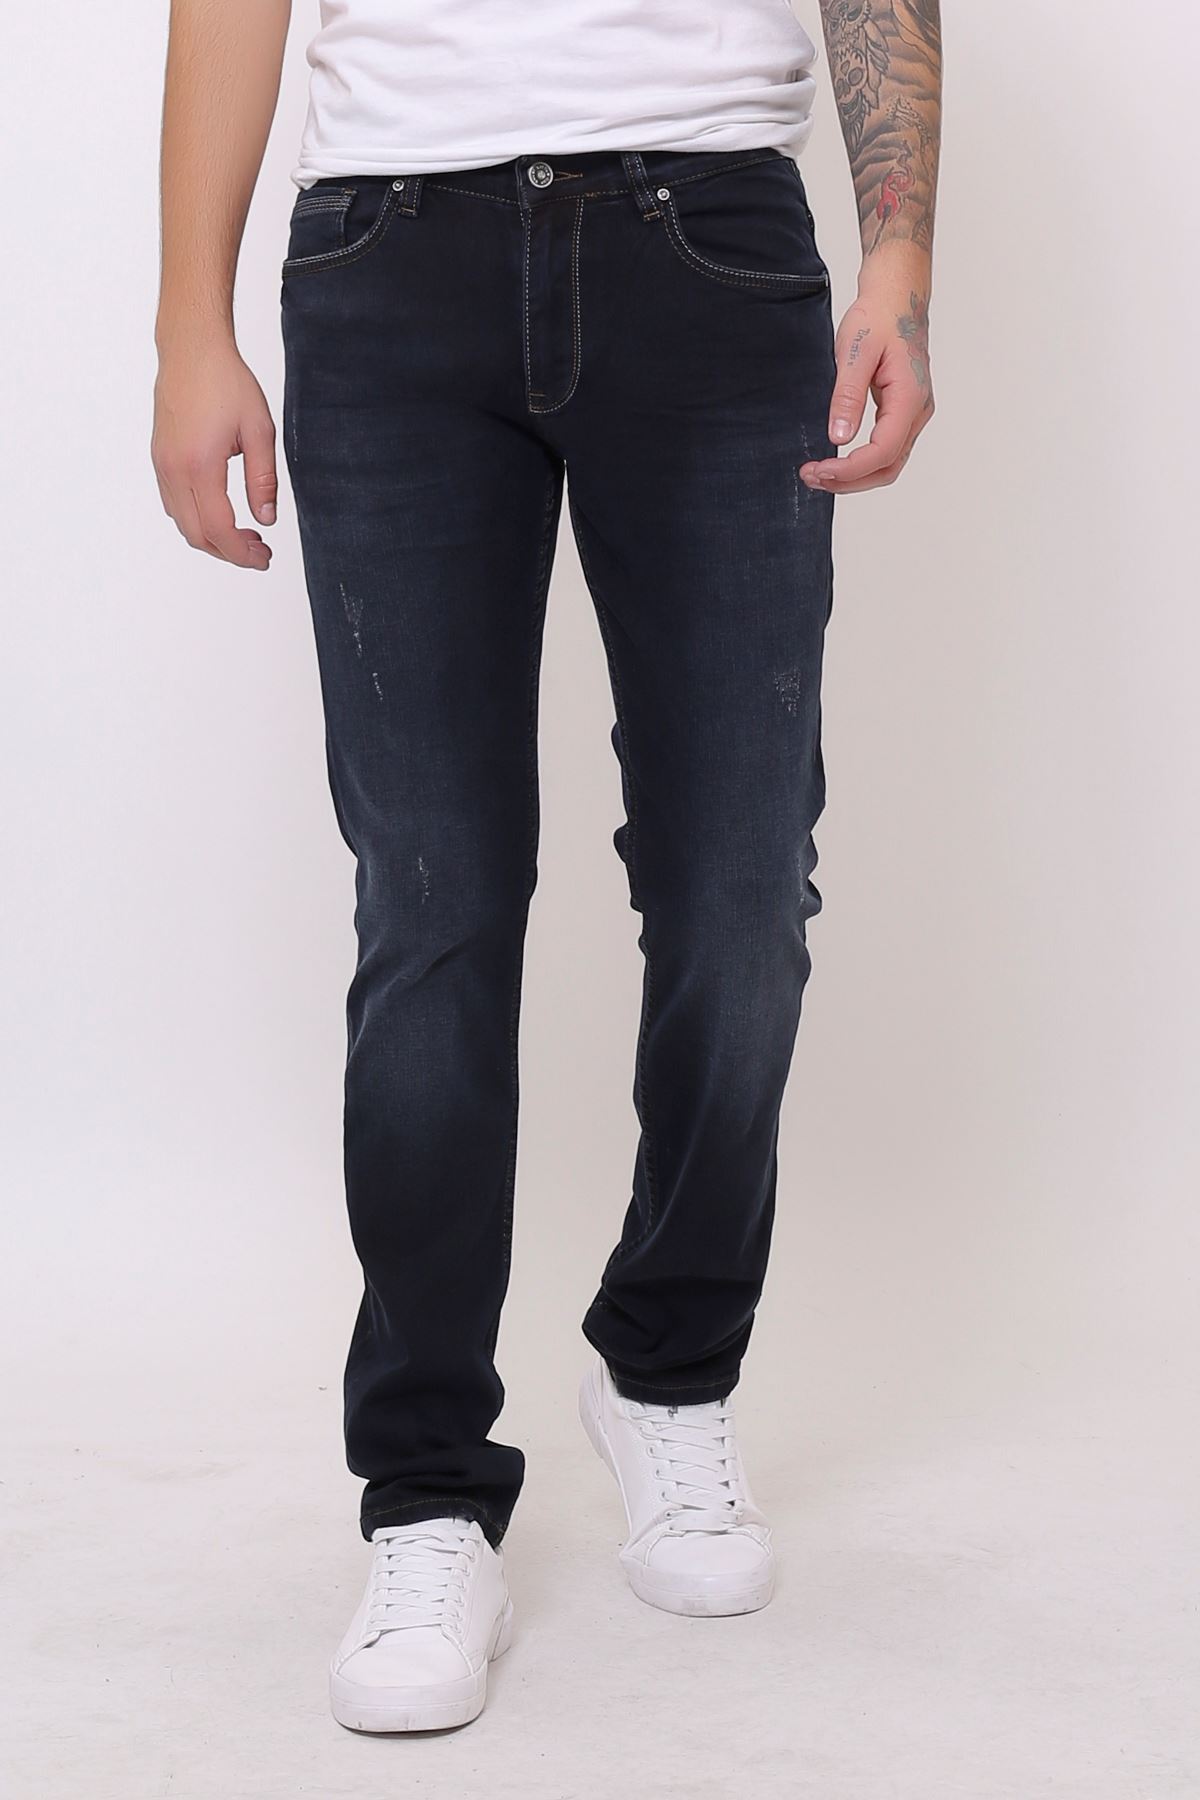 Yeni Blue Black Slim Fit Fermuarlı Erkek Jeans Pantolon